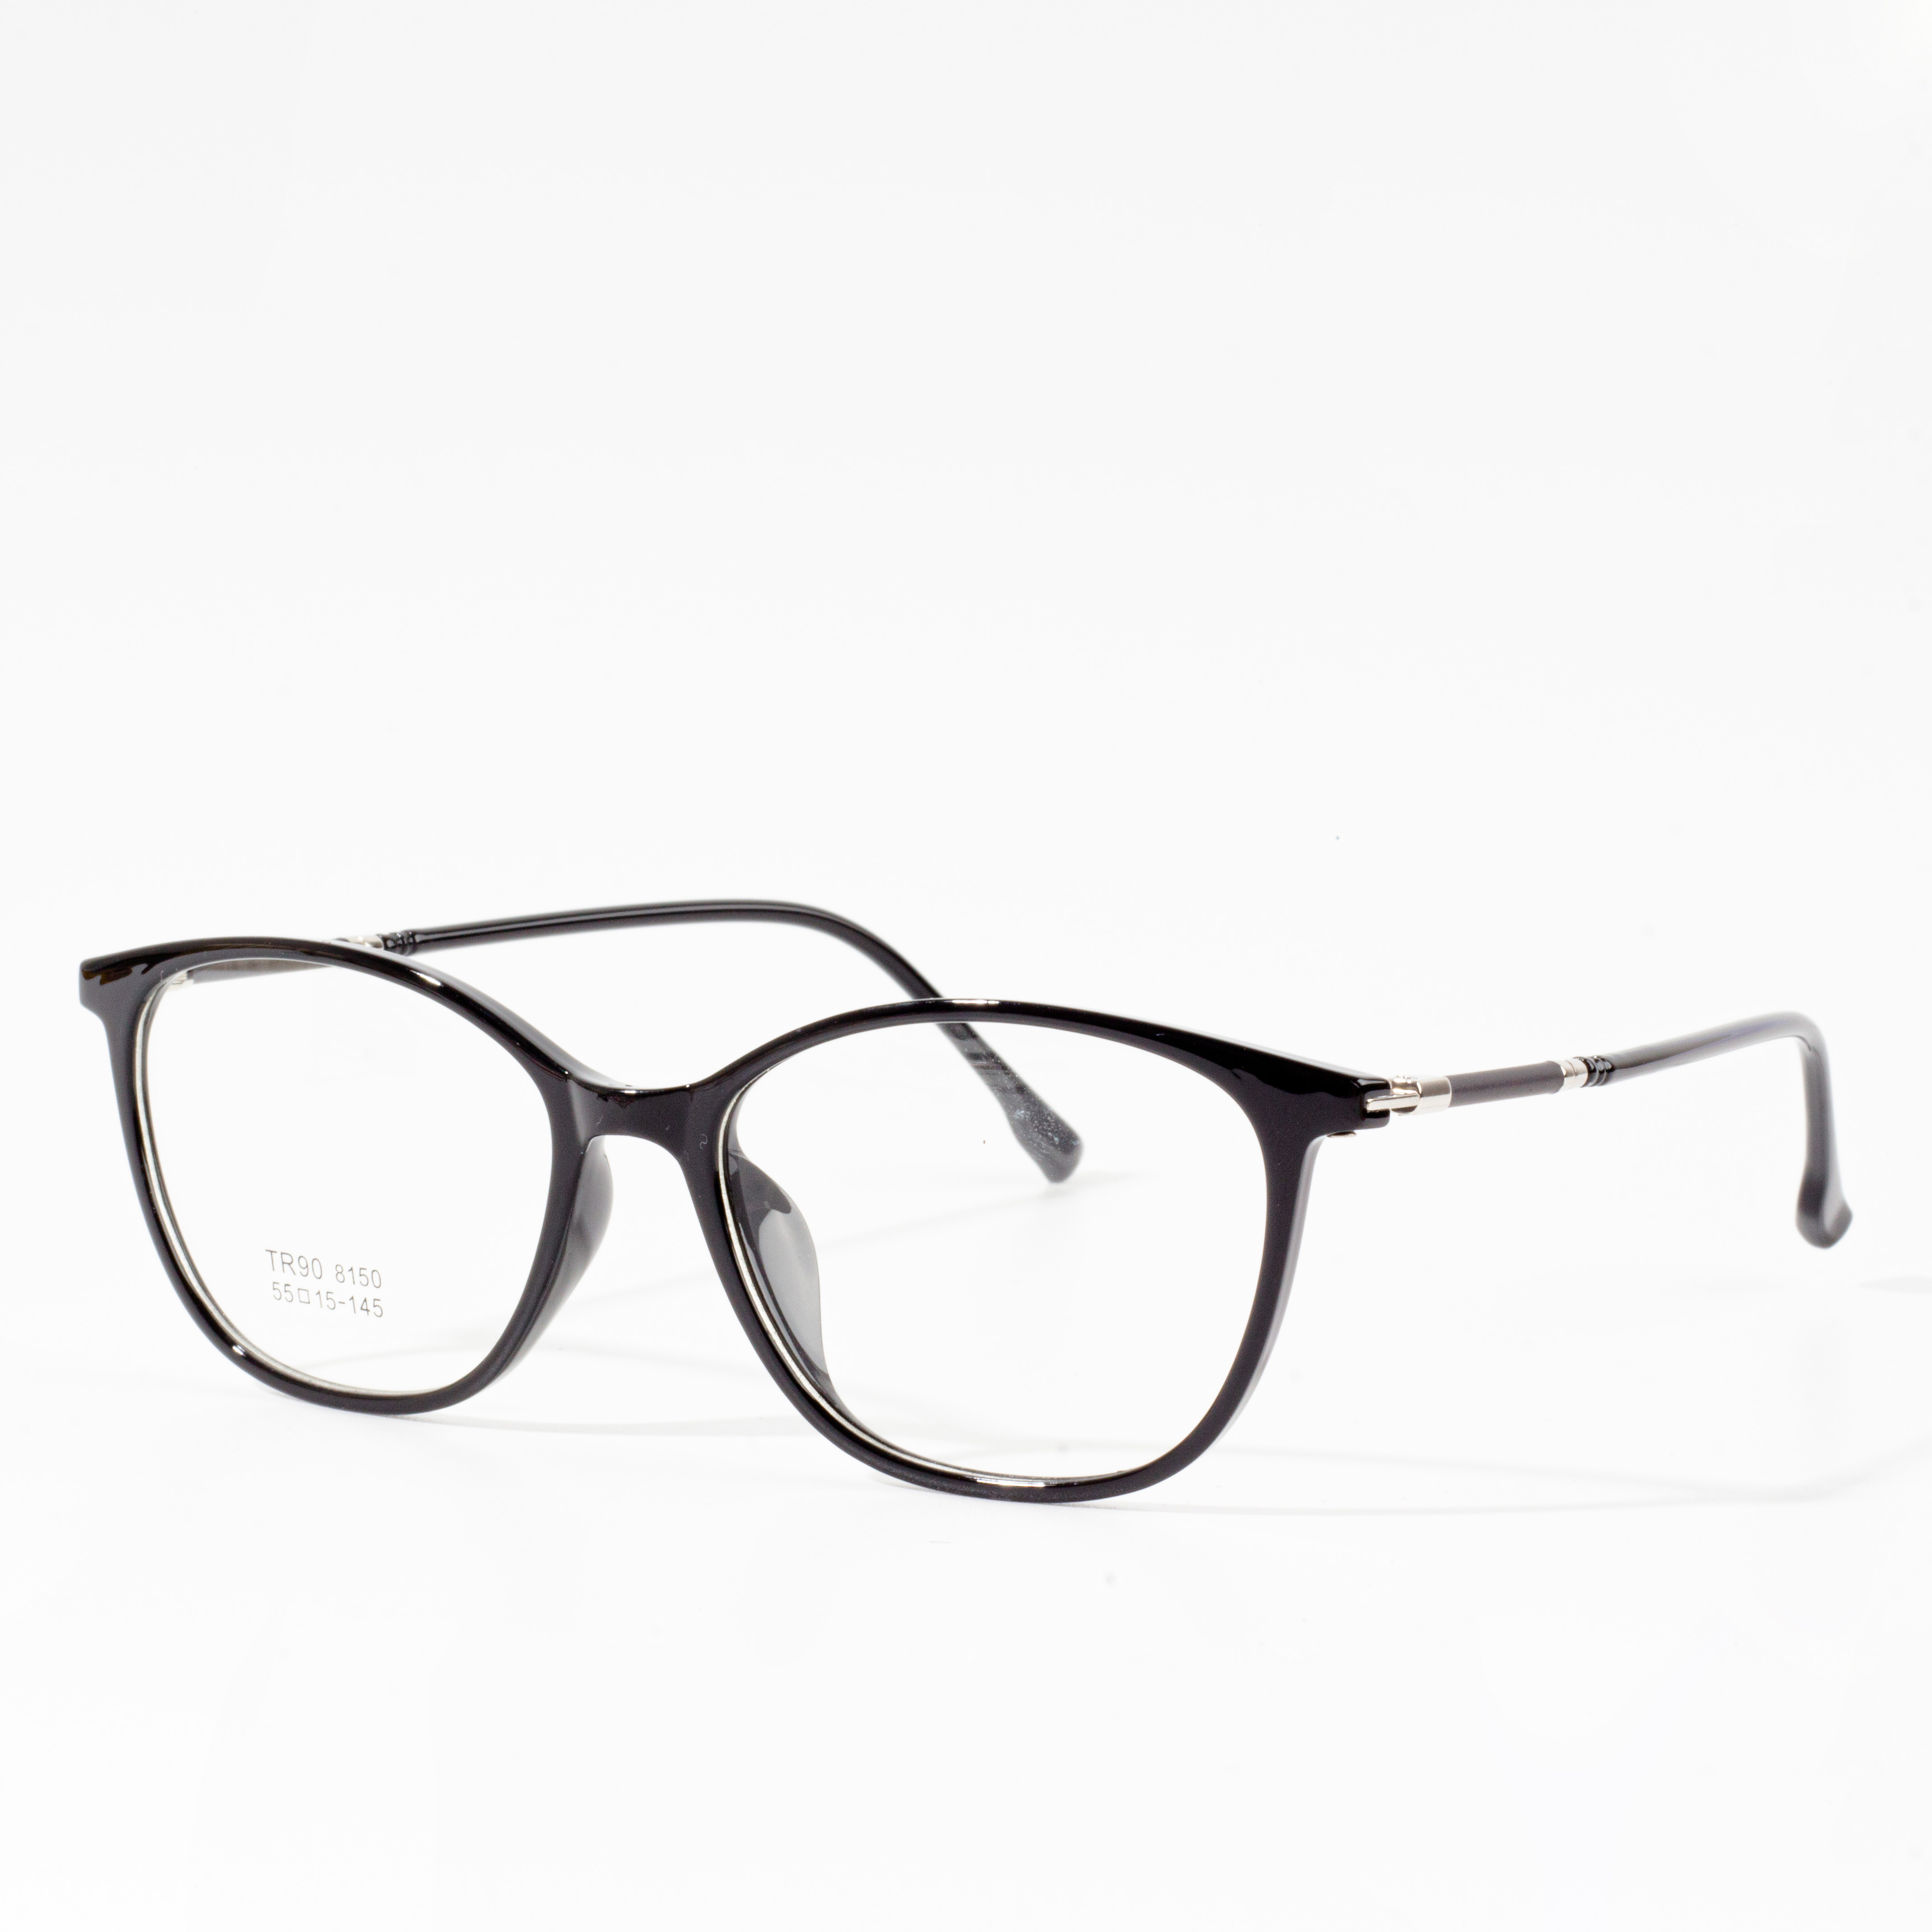 thin eyeglass frames